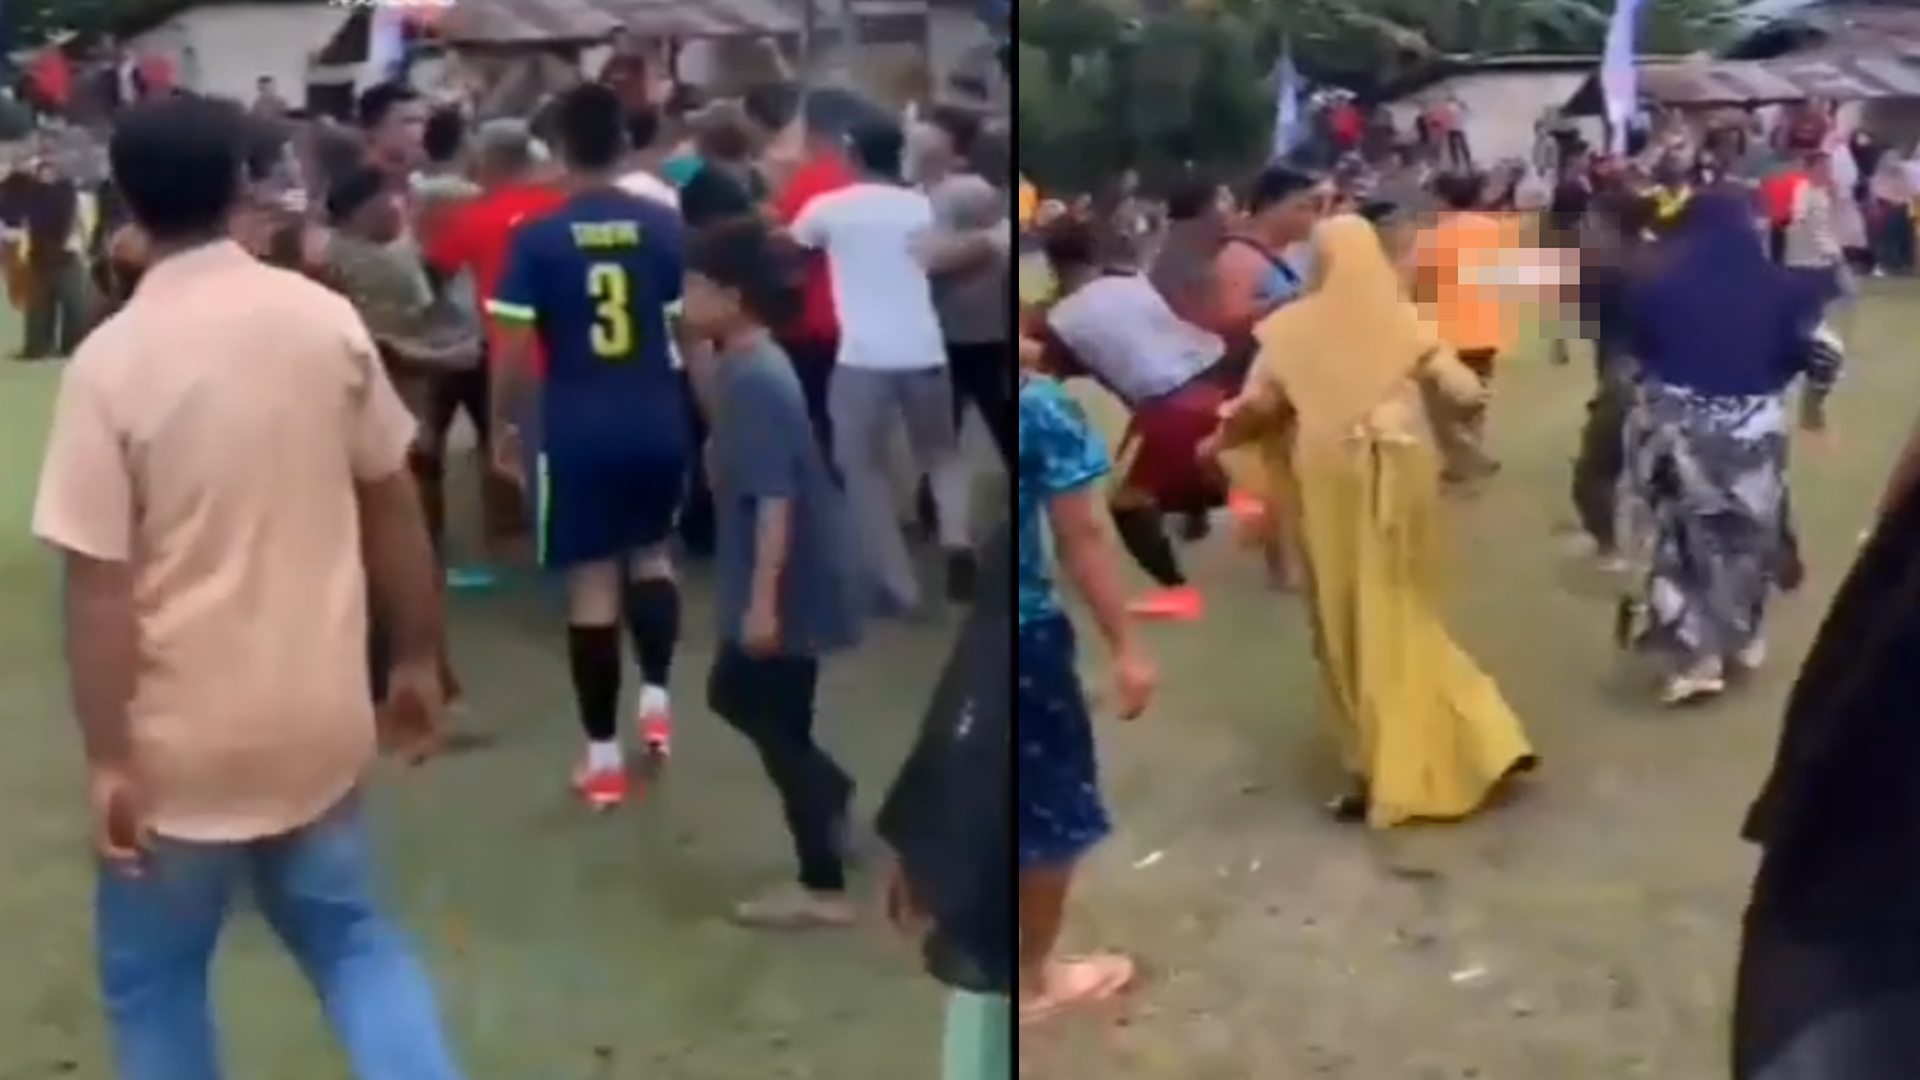 Sepakbola Tarkam di Tanjung Kudu Kampar Berakhir Ricuh, Emak-emak Turun Tangan